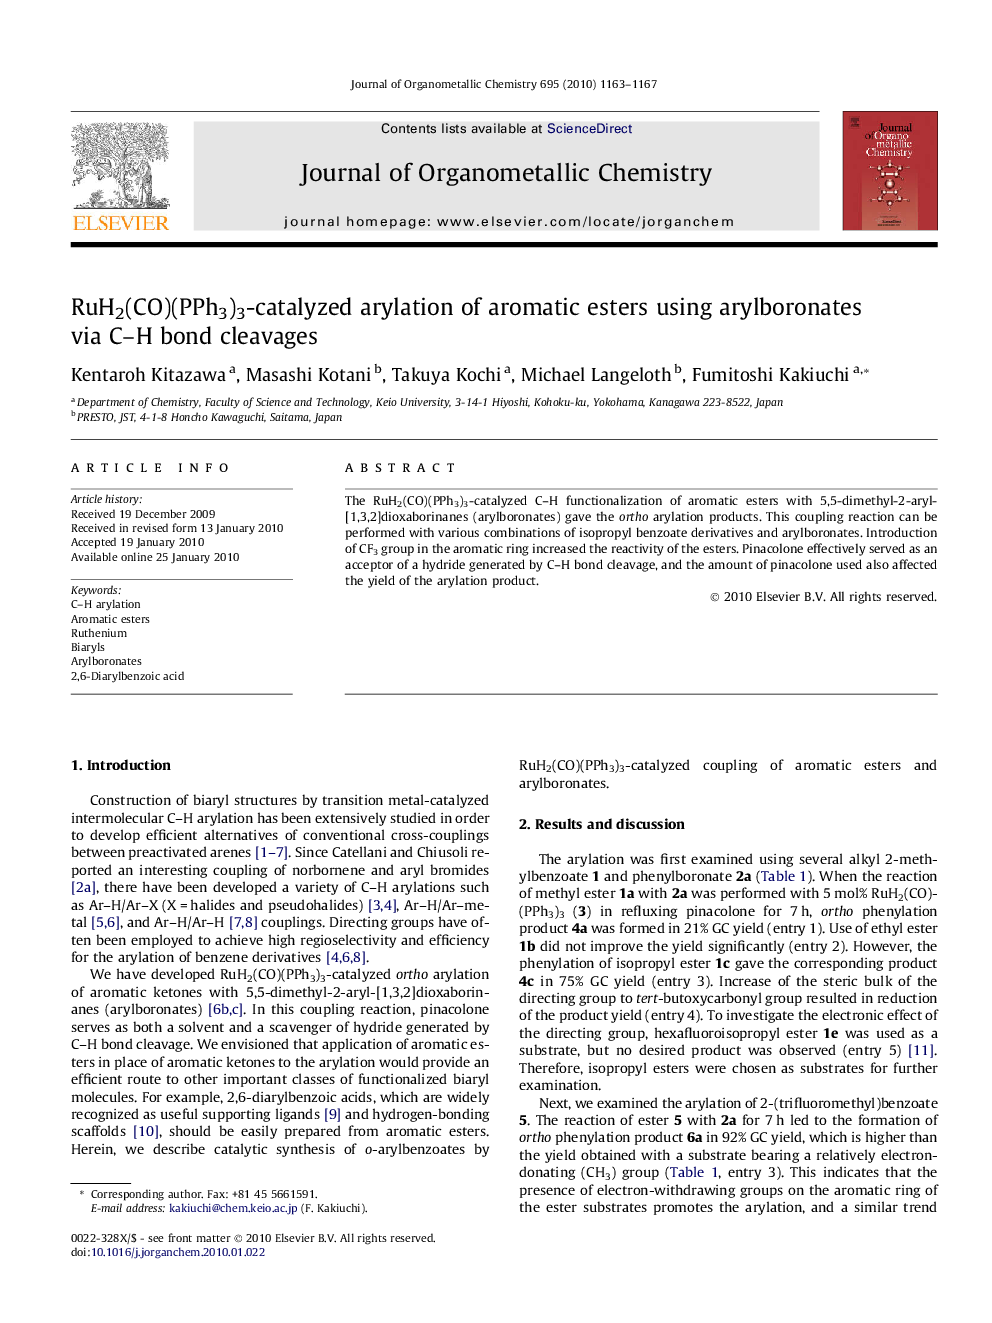 RuH2(CO)(PPh3)3-catalyzed arylation of aromatic esters using arylboronates via C–H bond cleavages